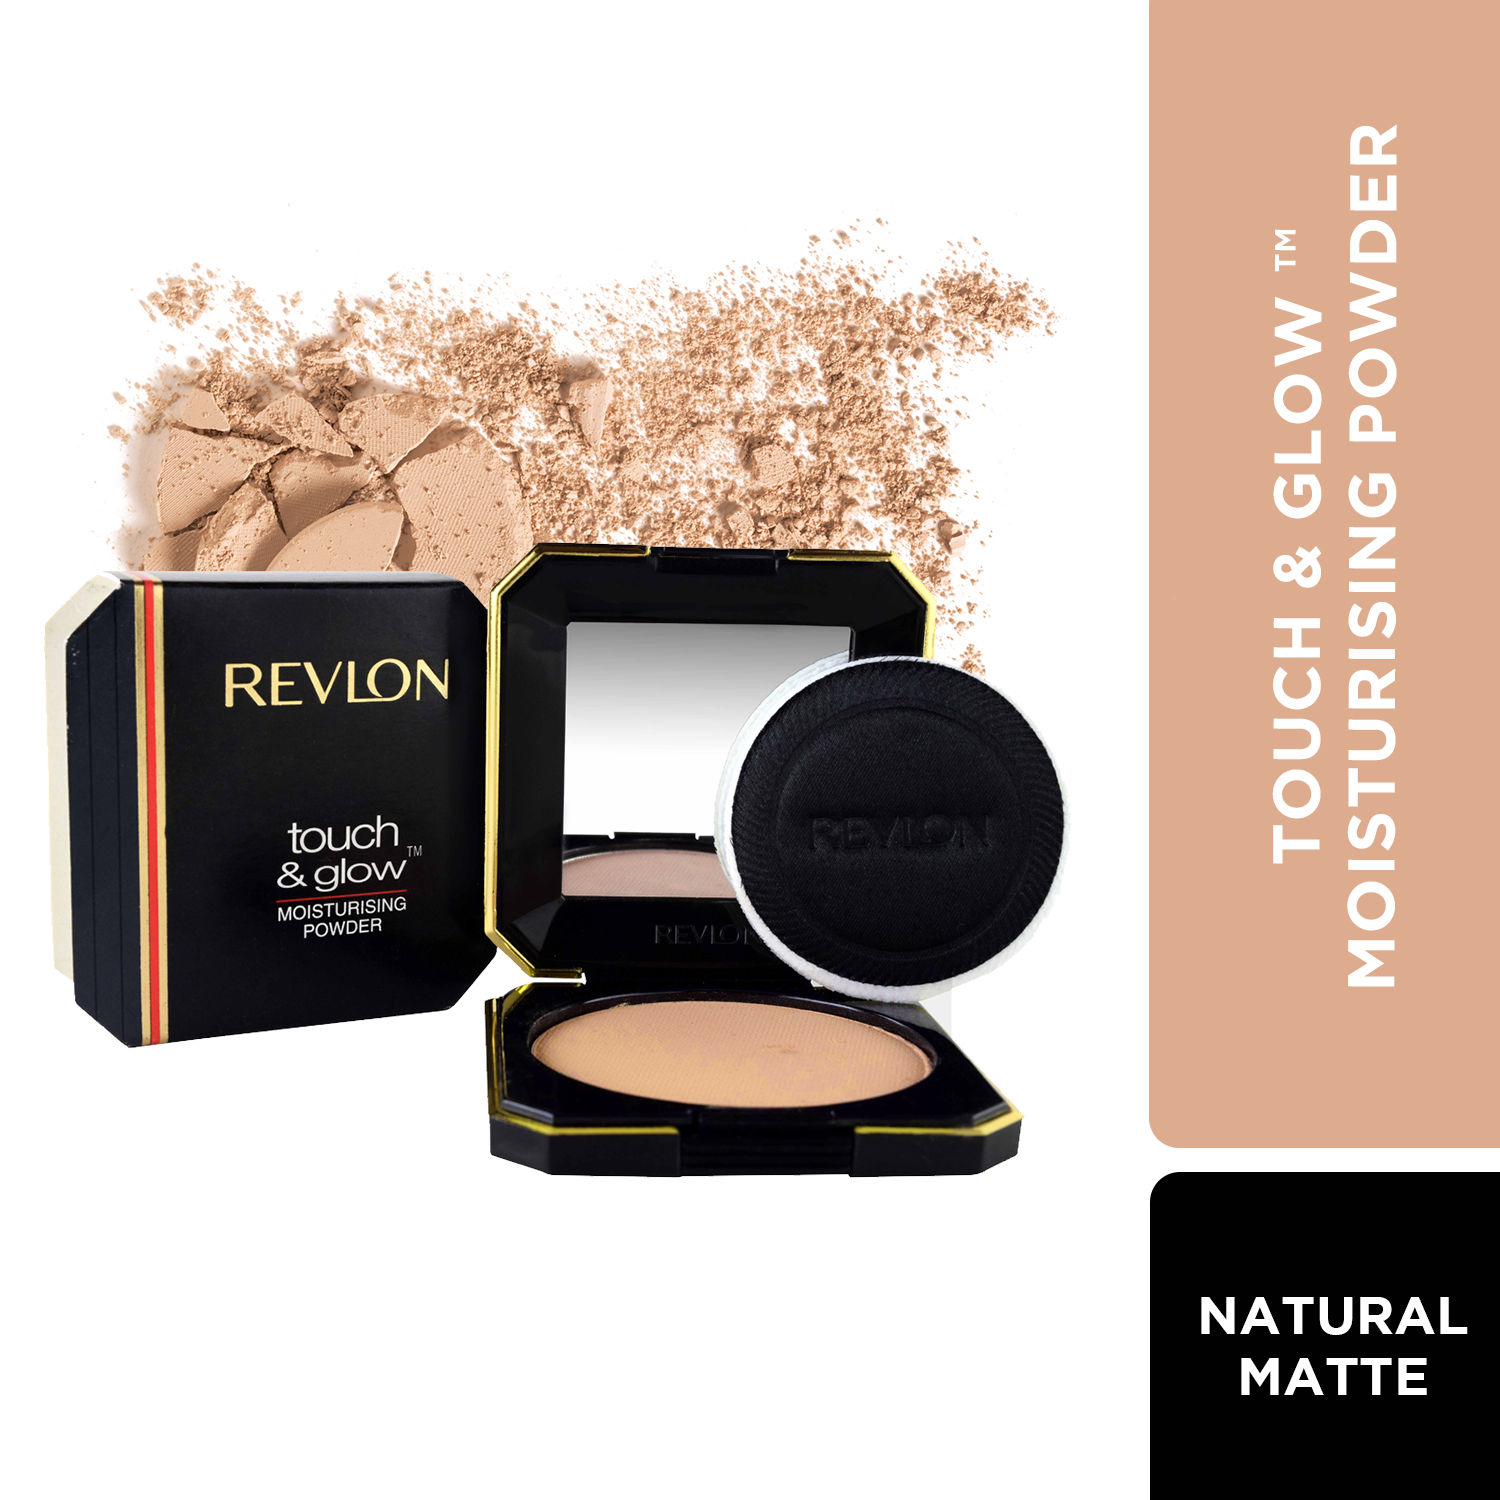 Revlon Touch & Glow Moisturising Powder - Natural Matte